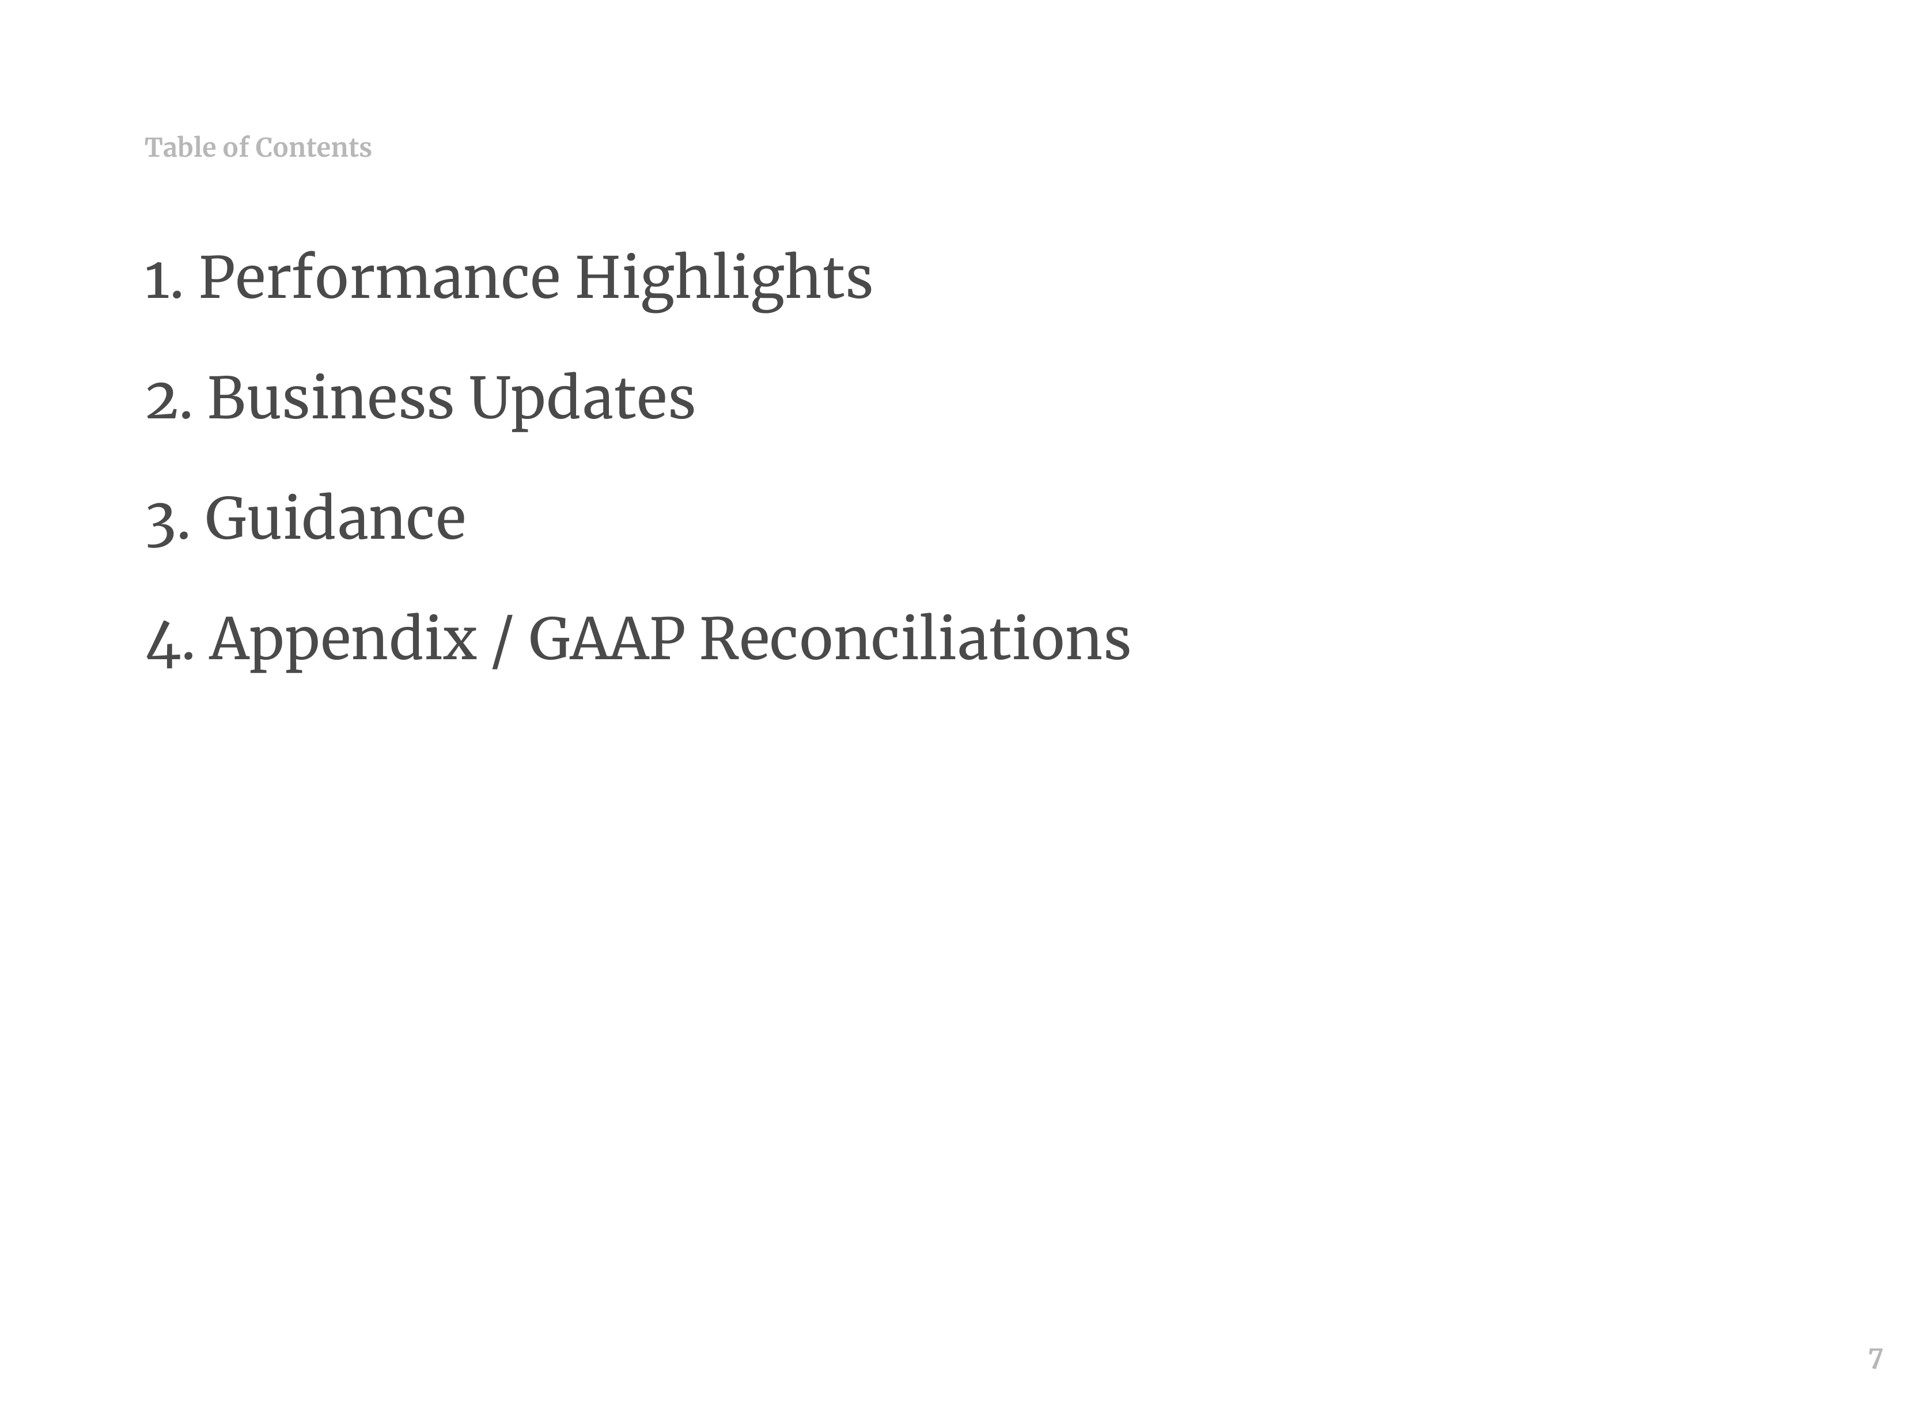 performance highlights business updates guidance appendix reconciliations | Lemonade